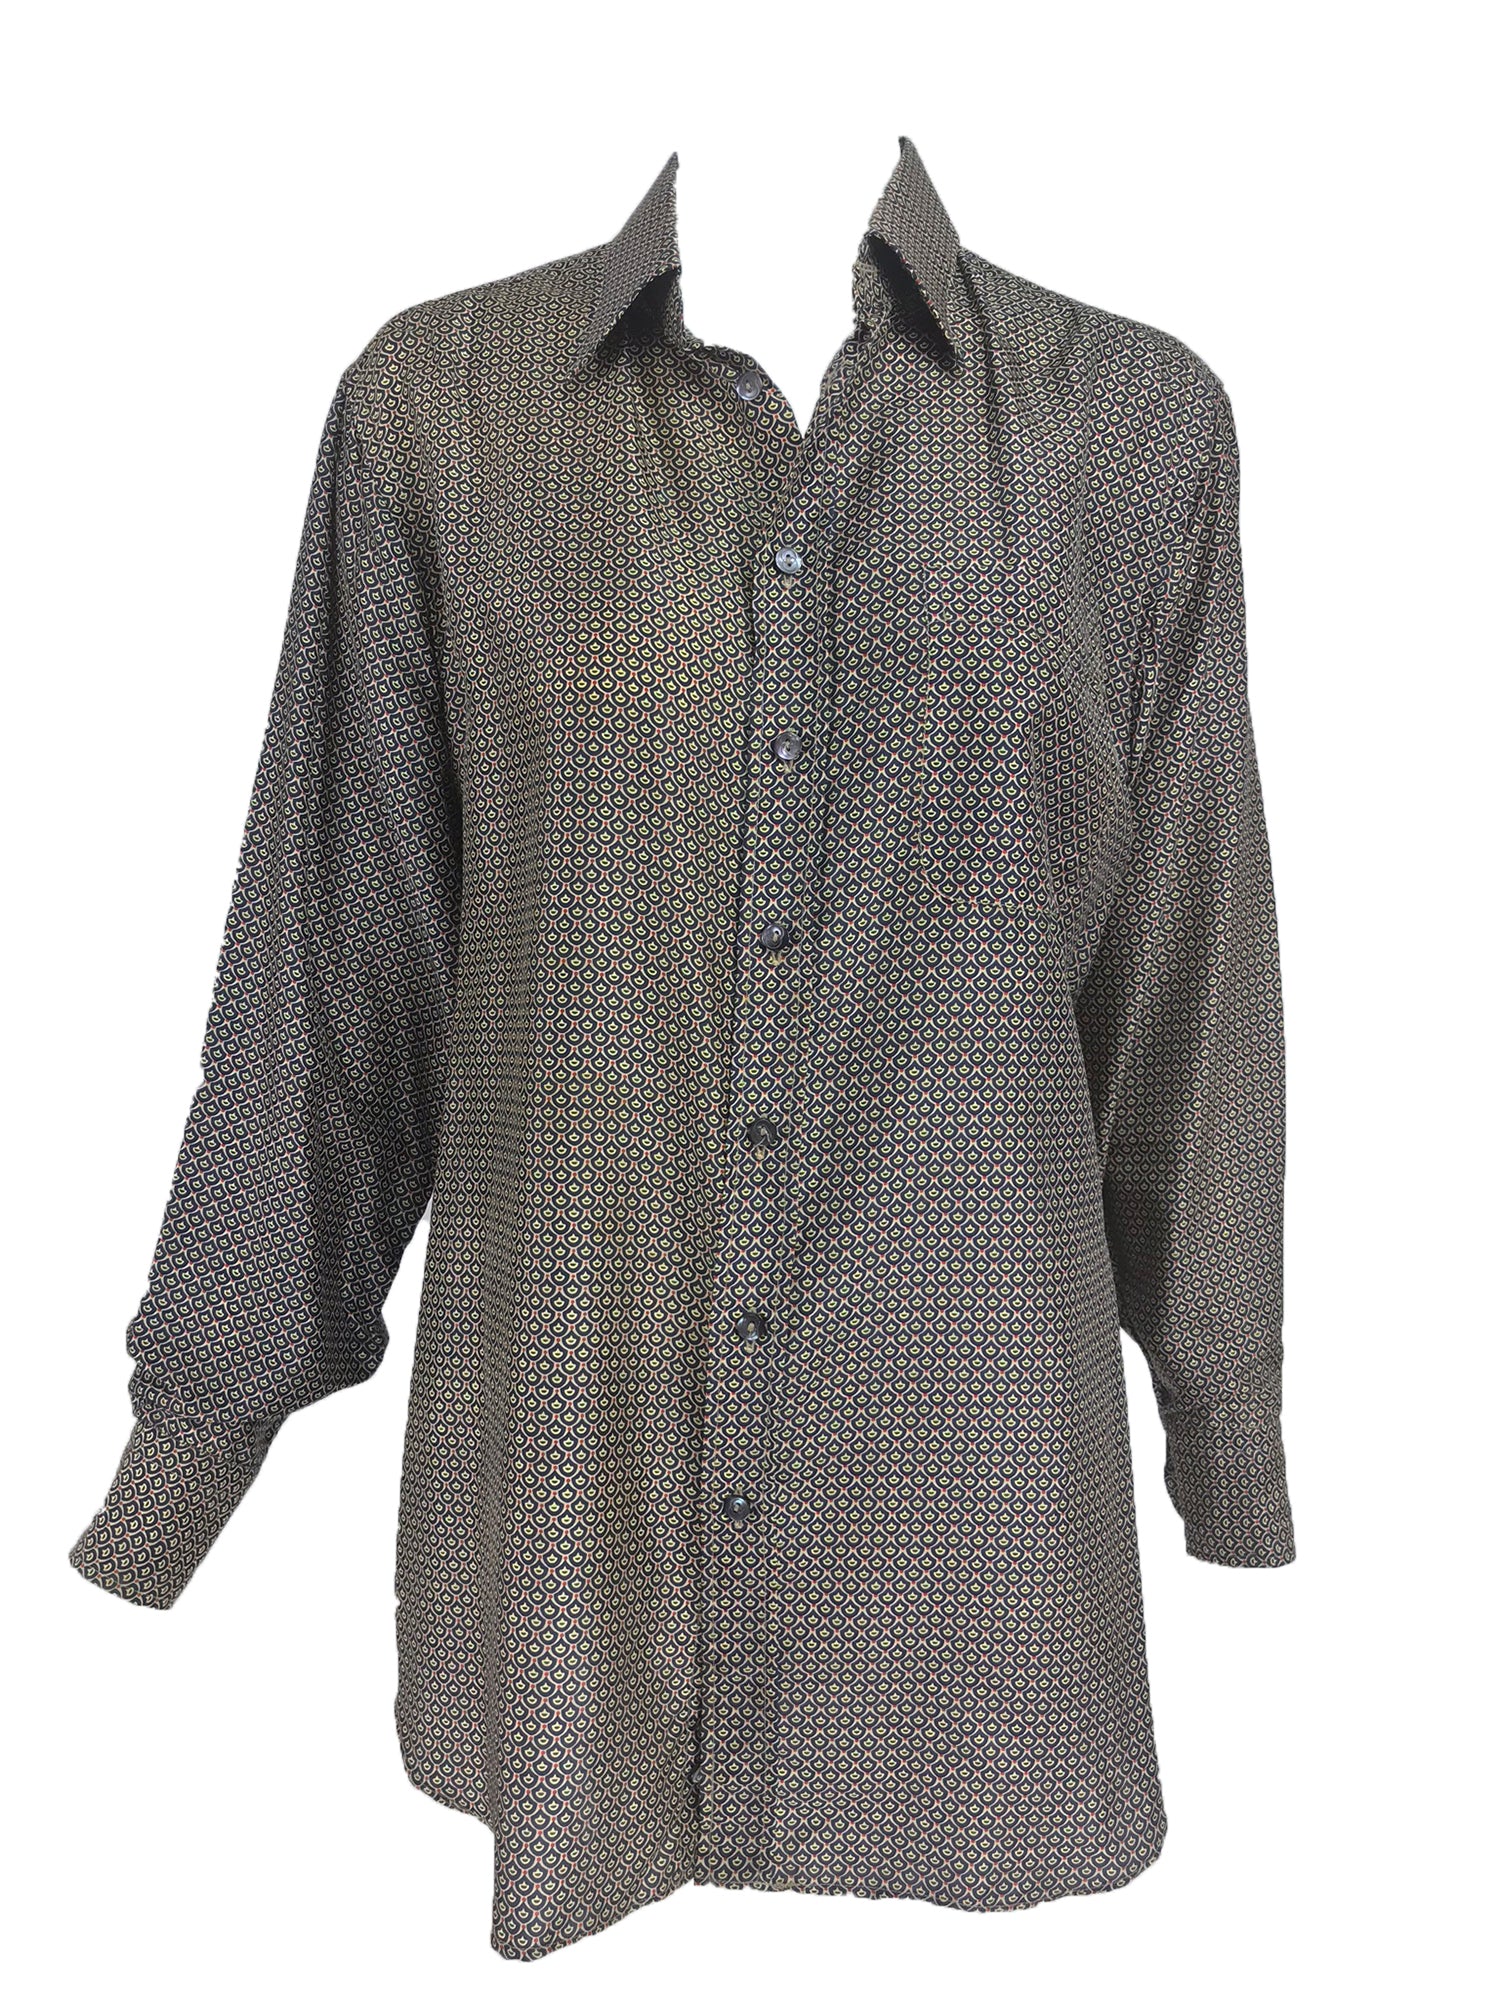 Gucci Men's Horsebit-print Silk-Twill Shirt